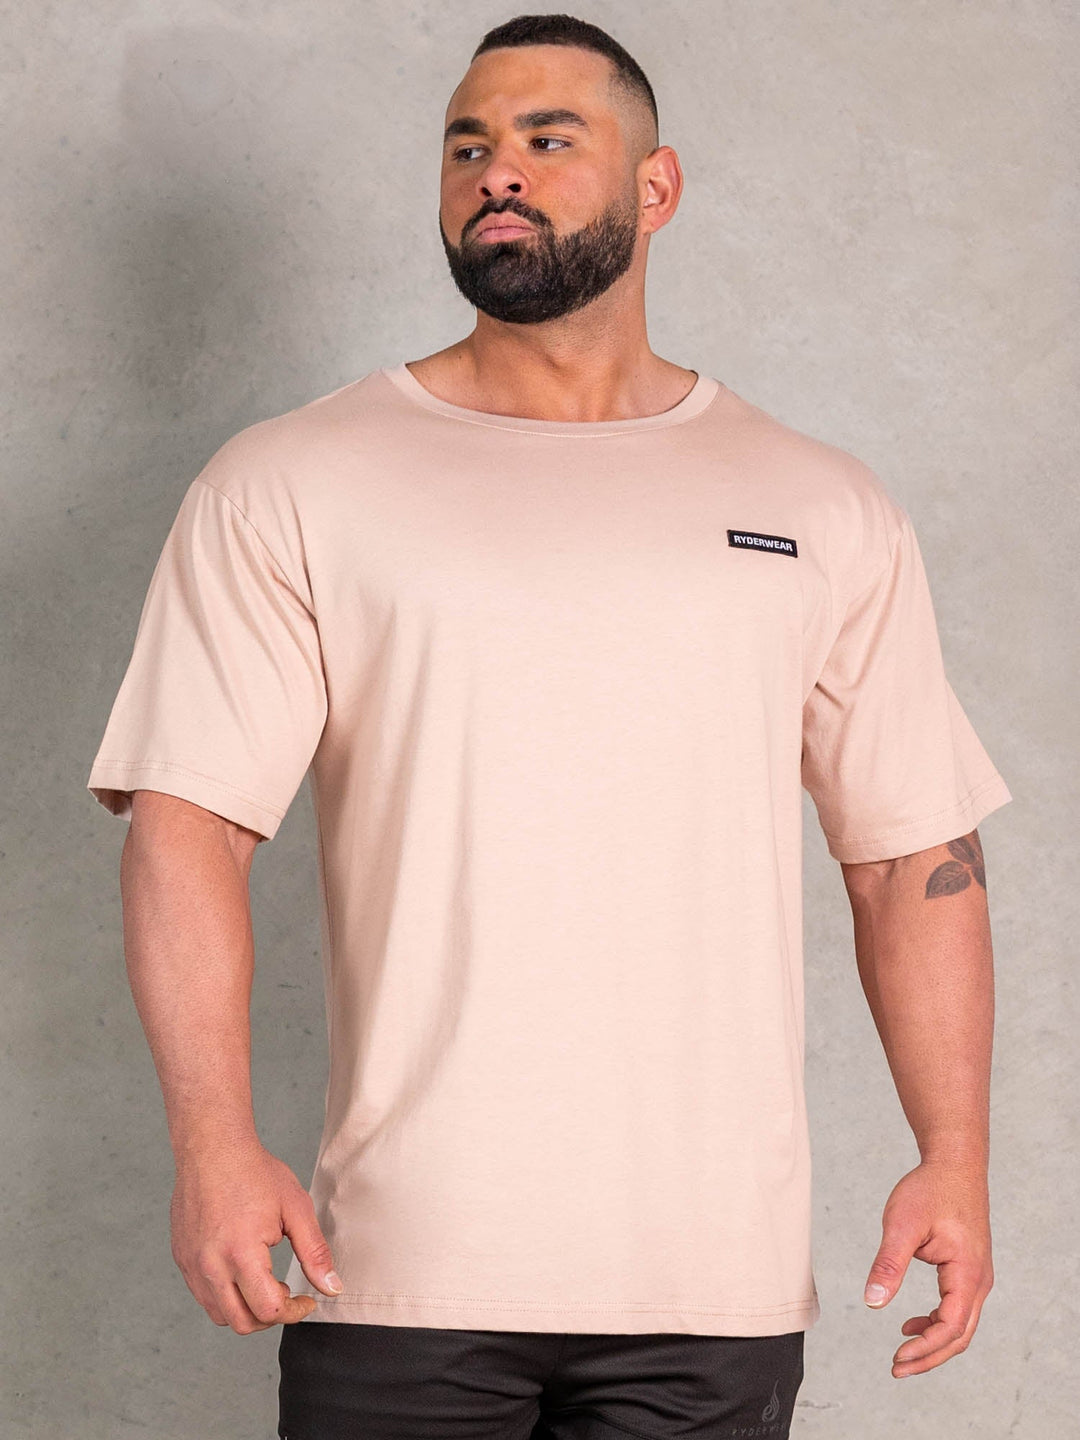 NRG Oversized T-Shirt - Biscotti Clothing Ryderwear 